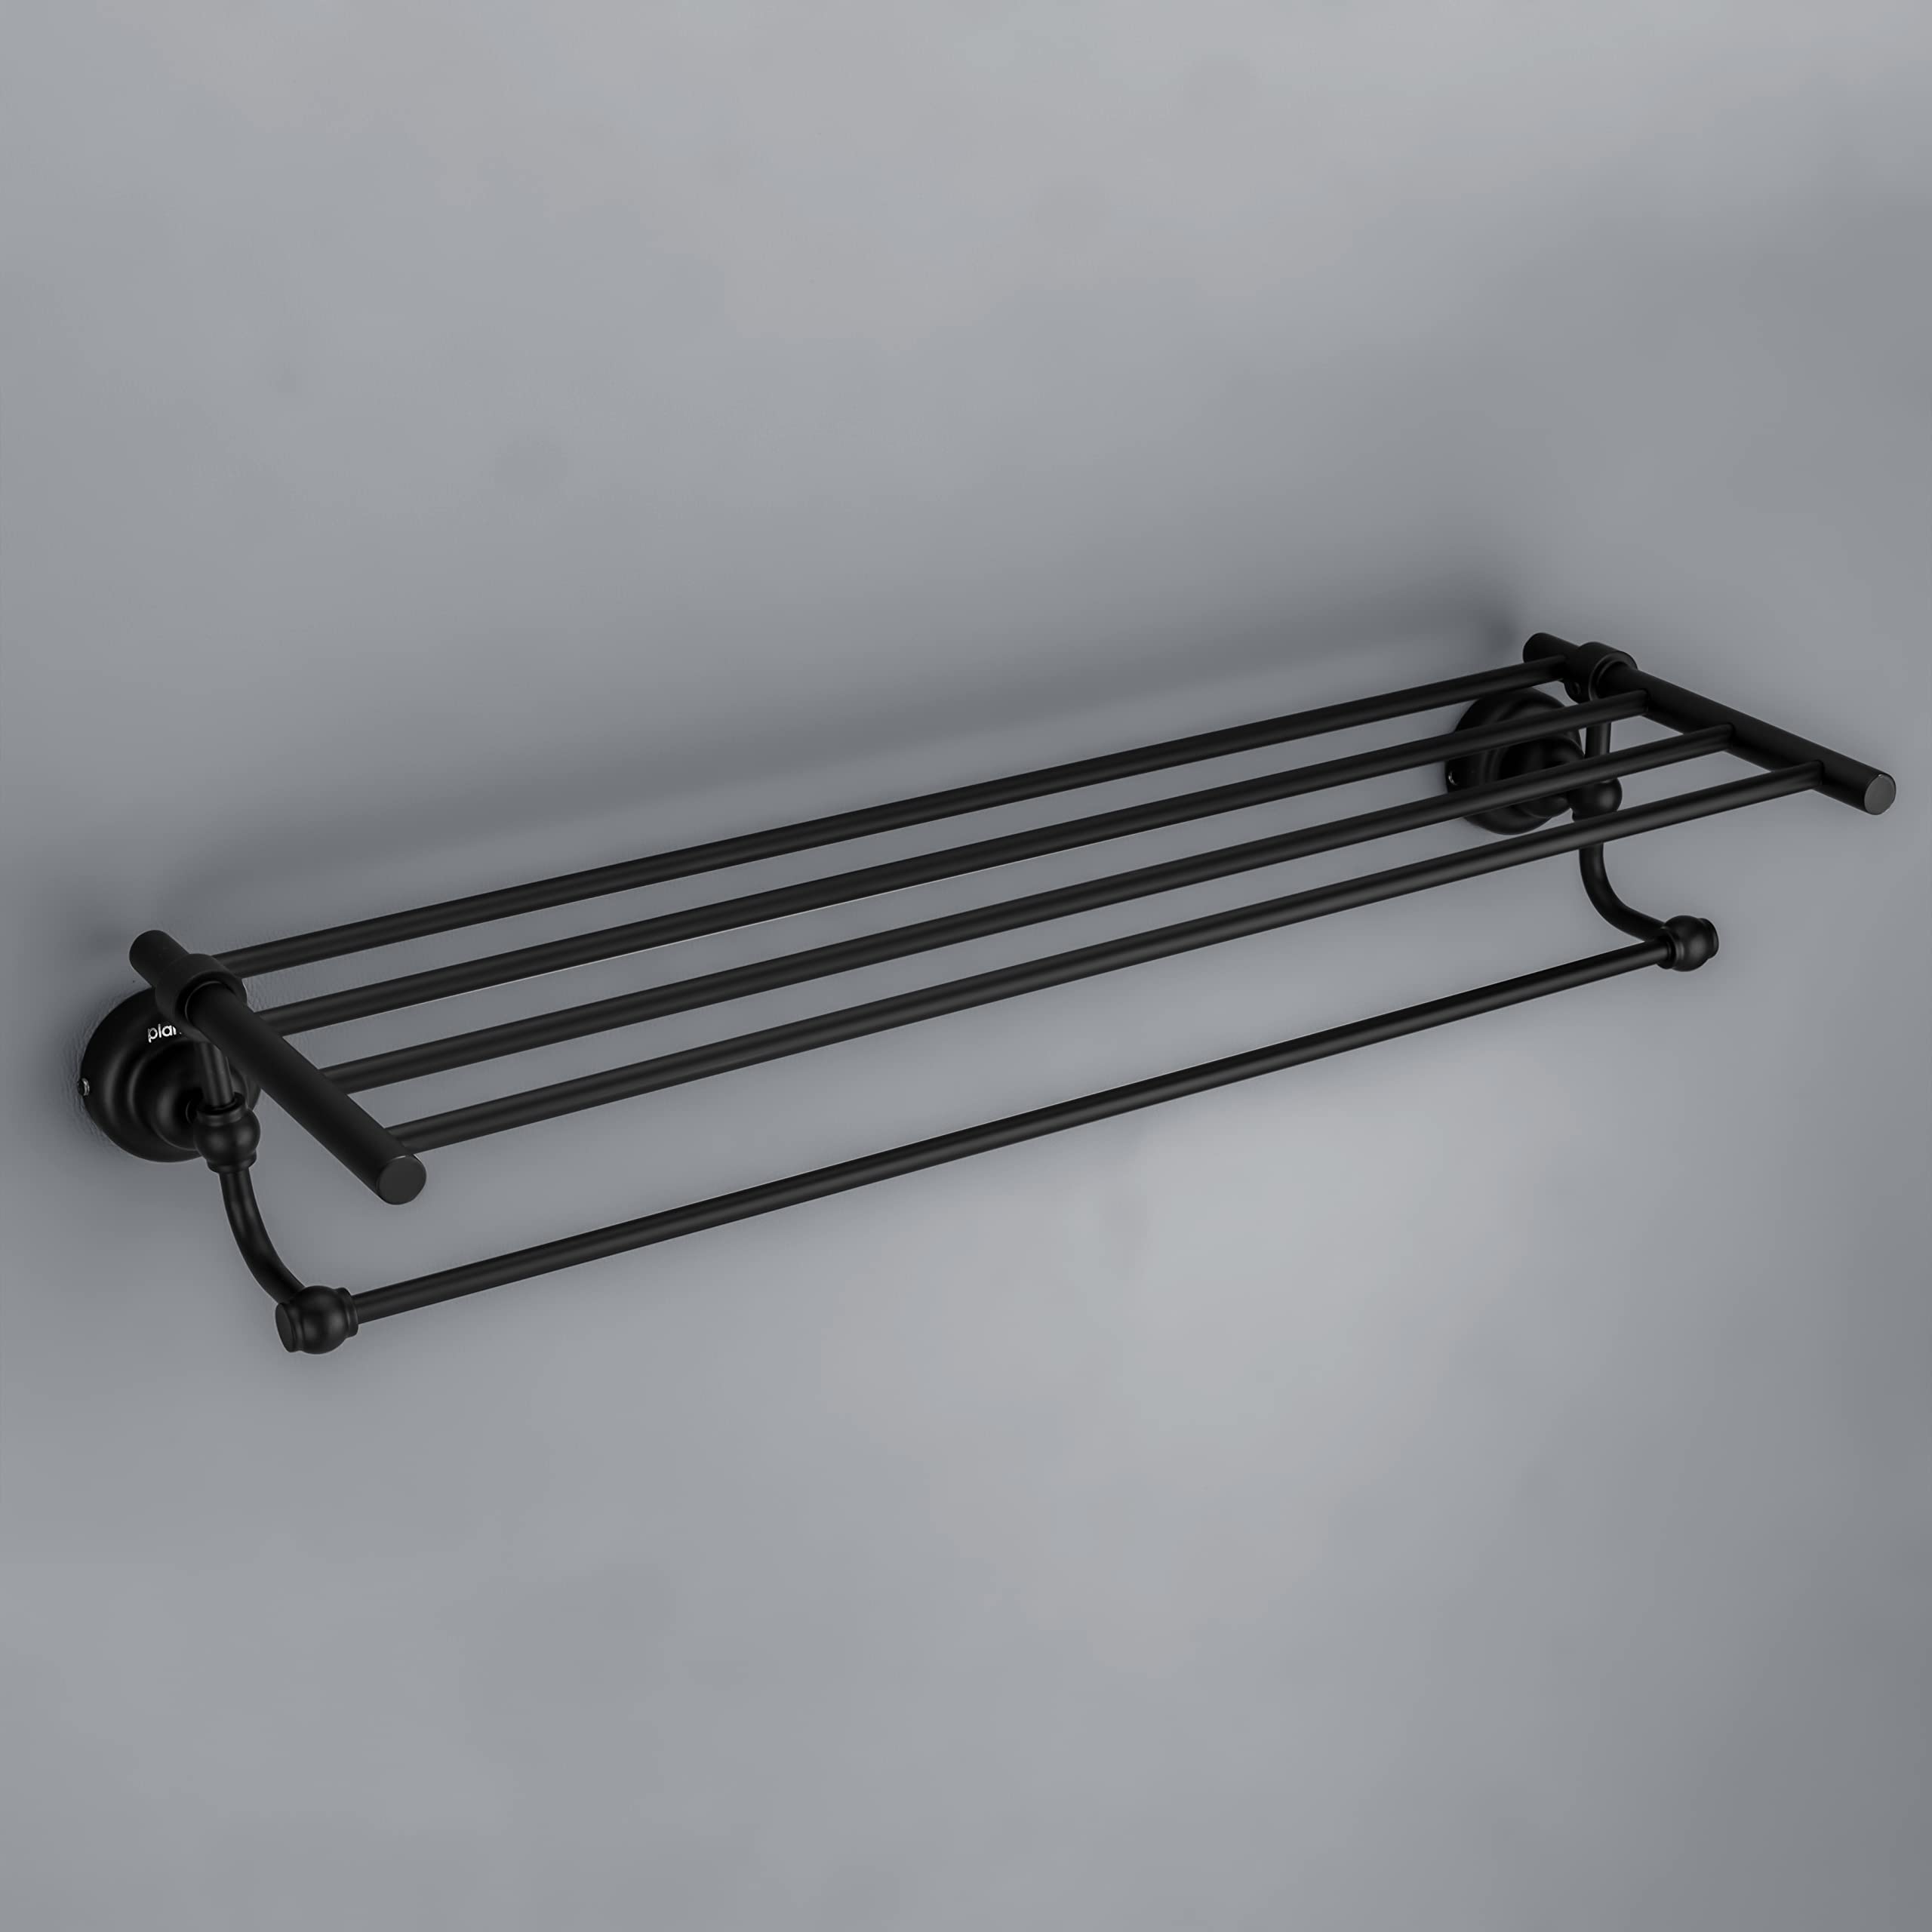 Plantex Skyllo Black 24 inches Long Towel Hanger for Bathroom - 304 Stainless Steel